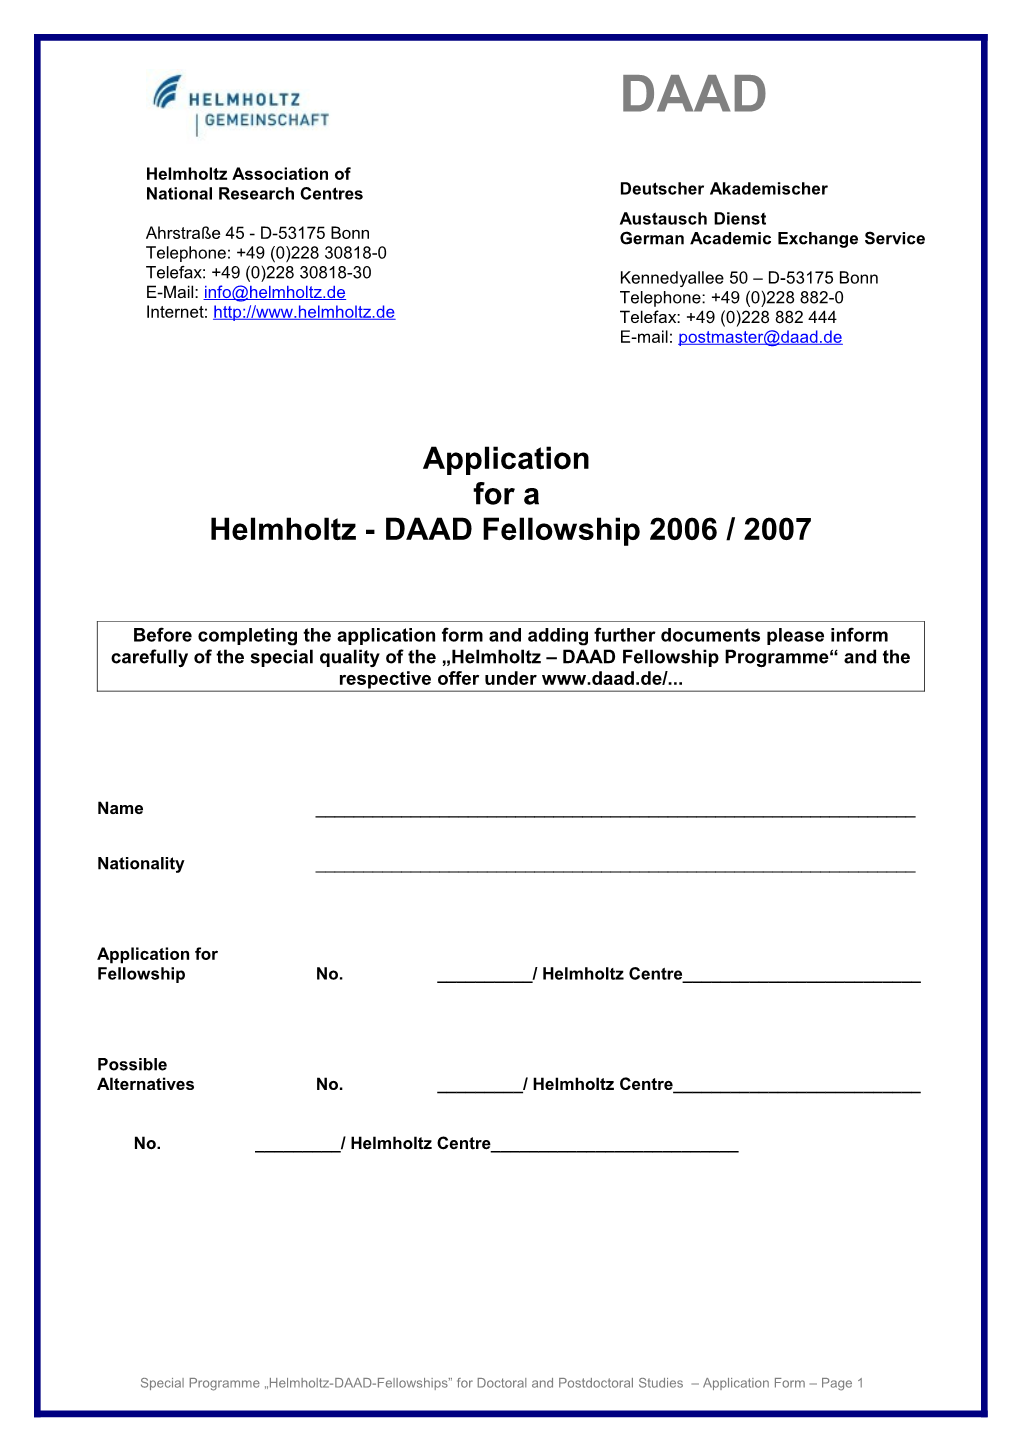 Helmholtz - DAAD Fellowship 2006 / 2007